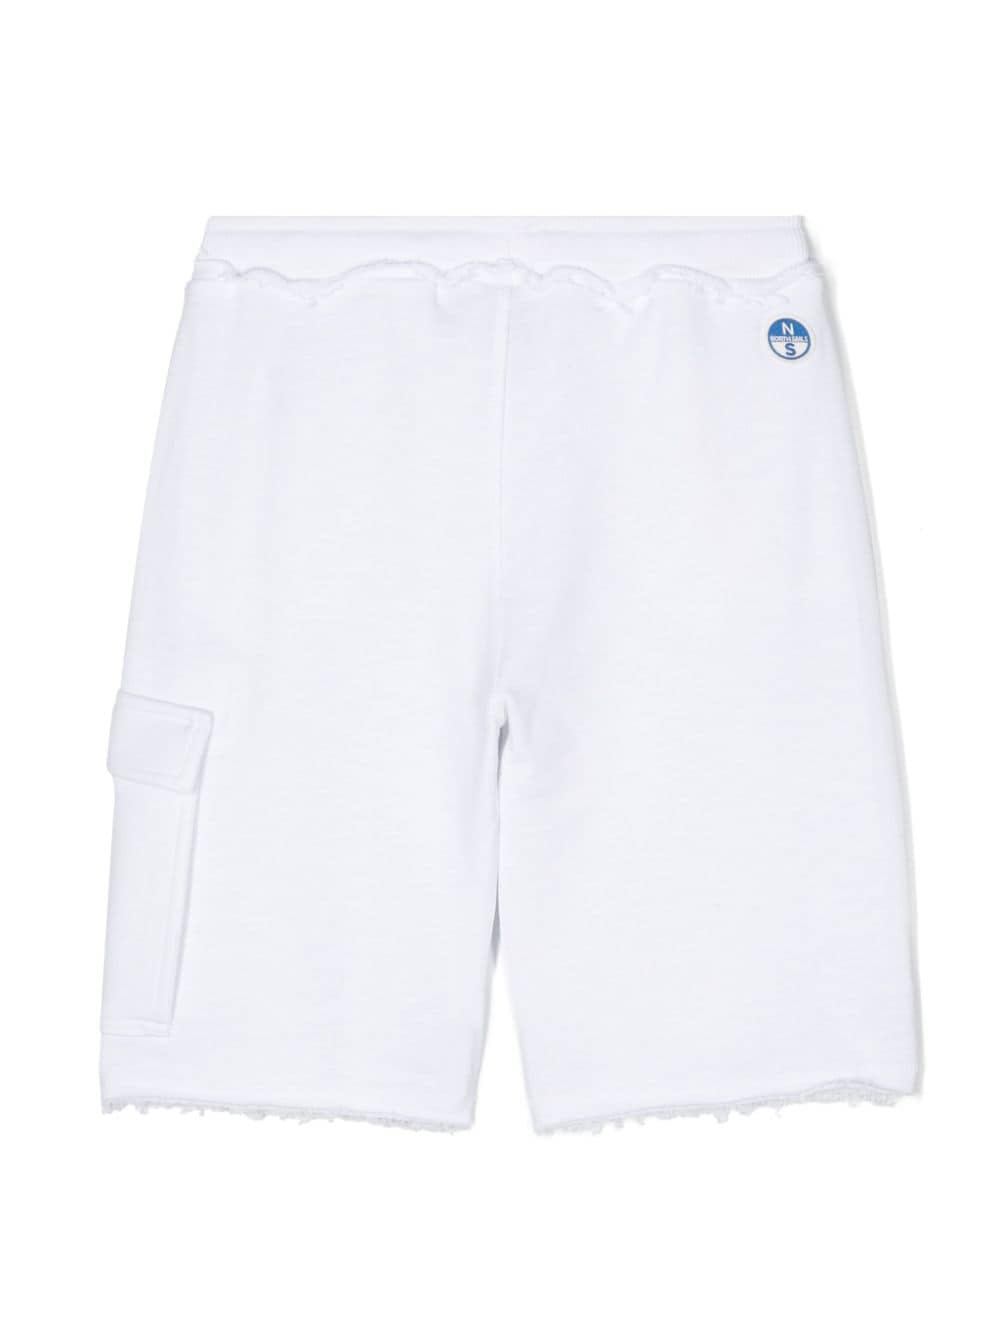 White Bermuda shorts for boys with logo